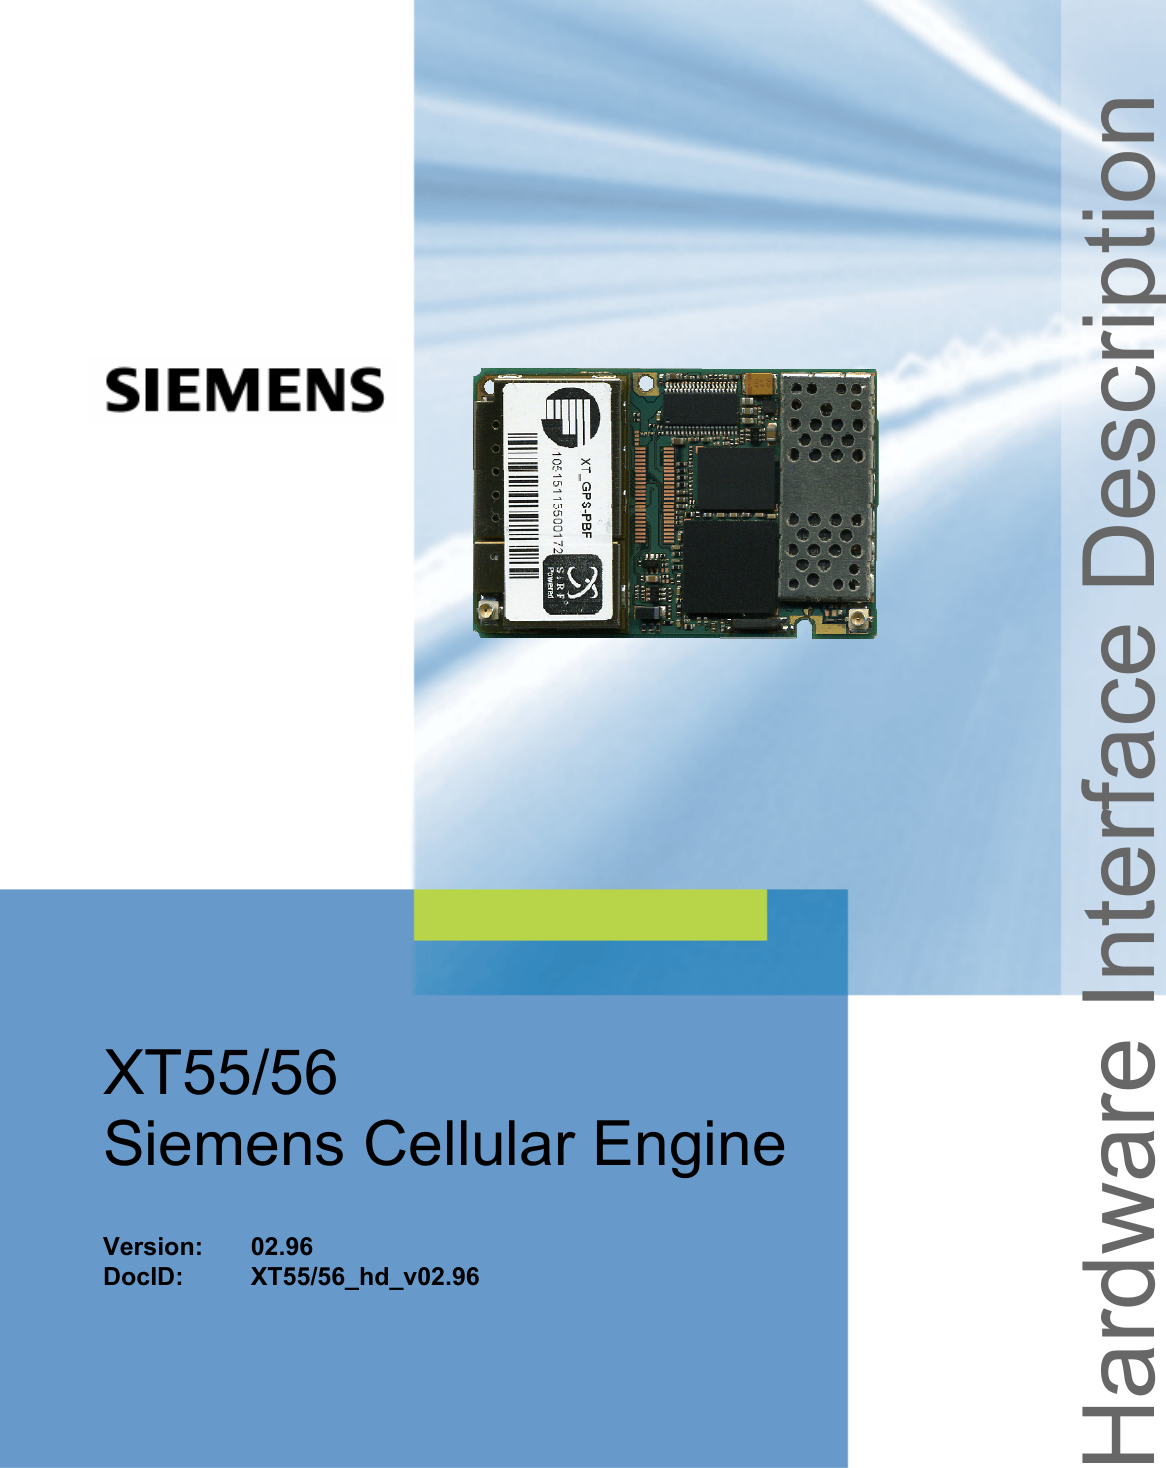 XT55/56 Hardware Interface Description Confidential / Preliminary s XT55/56_hd_v02.96  Page 1 of 125  18.08.2005  Hardware Interface Description XT55/56 Siemens Cellular Engine   Version: 02.96 DocID: XT55/56_hd_v02.96 